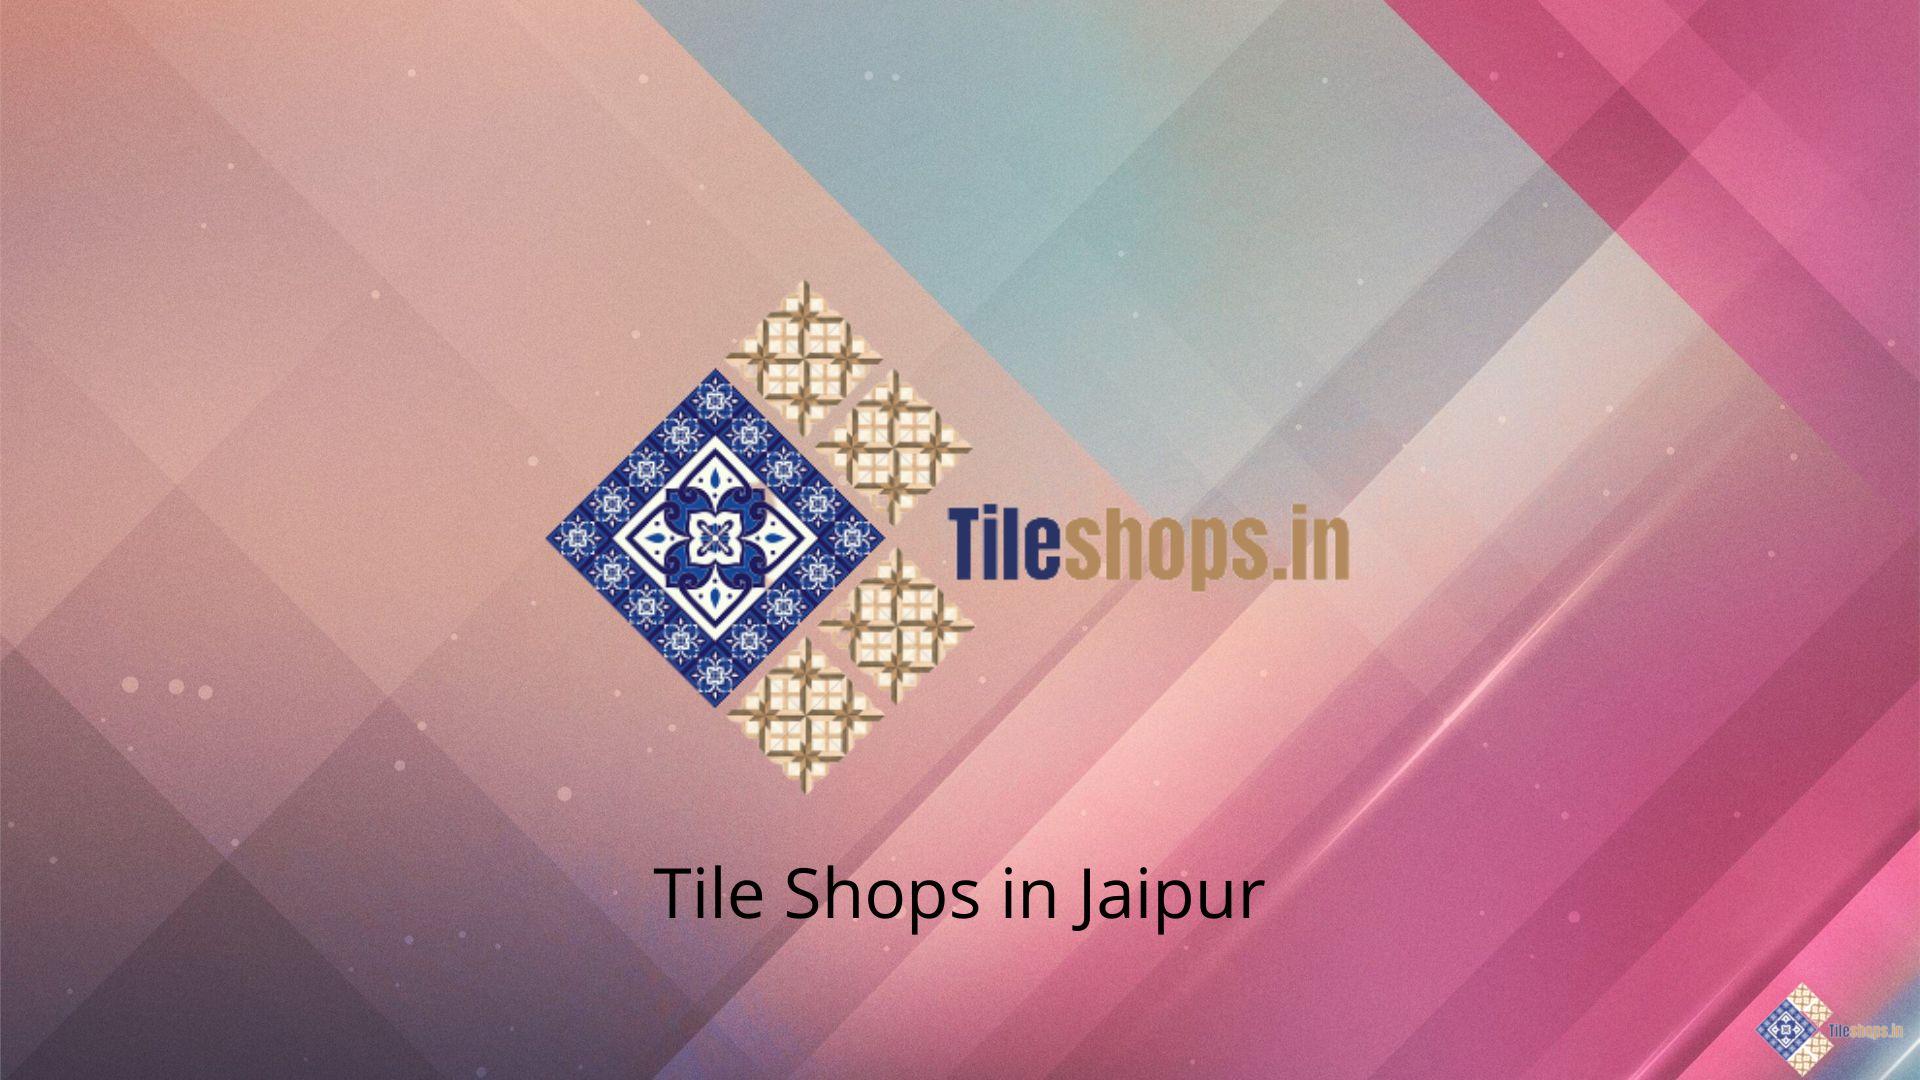 Tile Shops in Jaipur